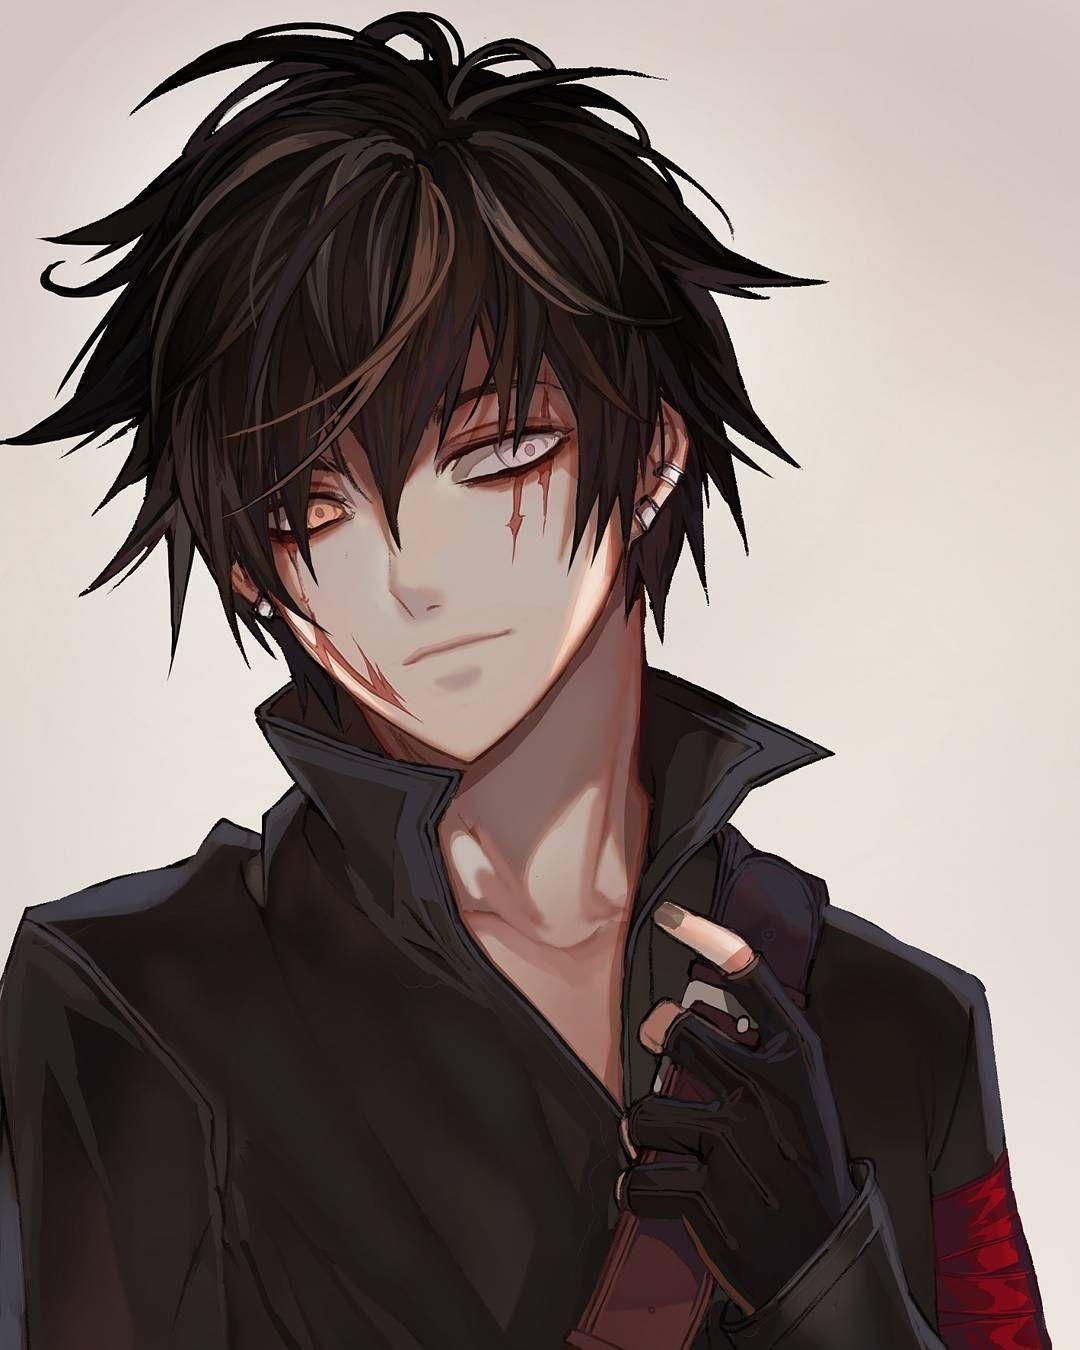 Anime Boy with Black Hair Wallpaper Free Anime Boy with Black Hair Background